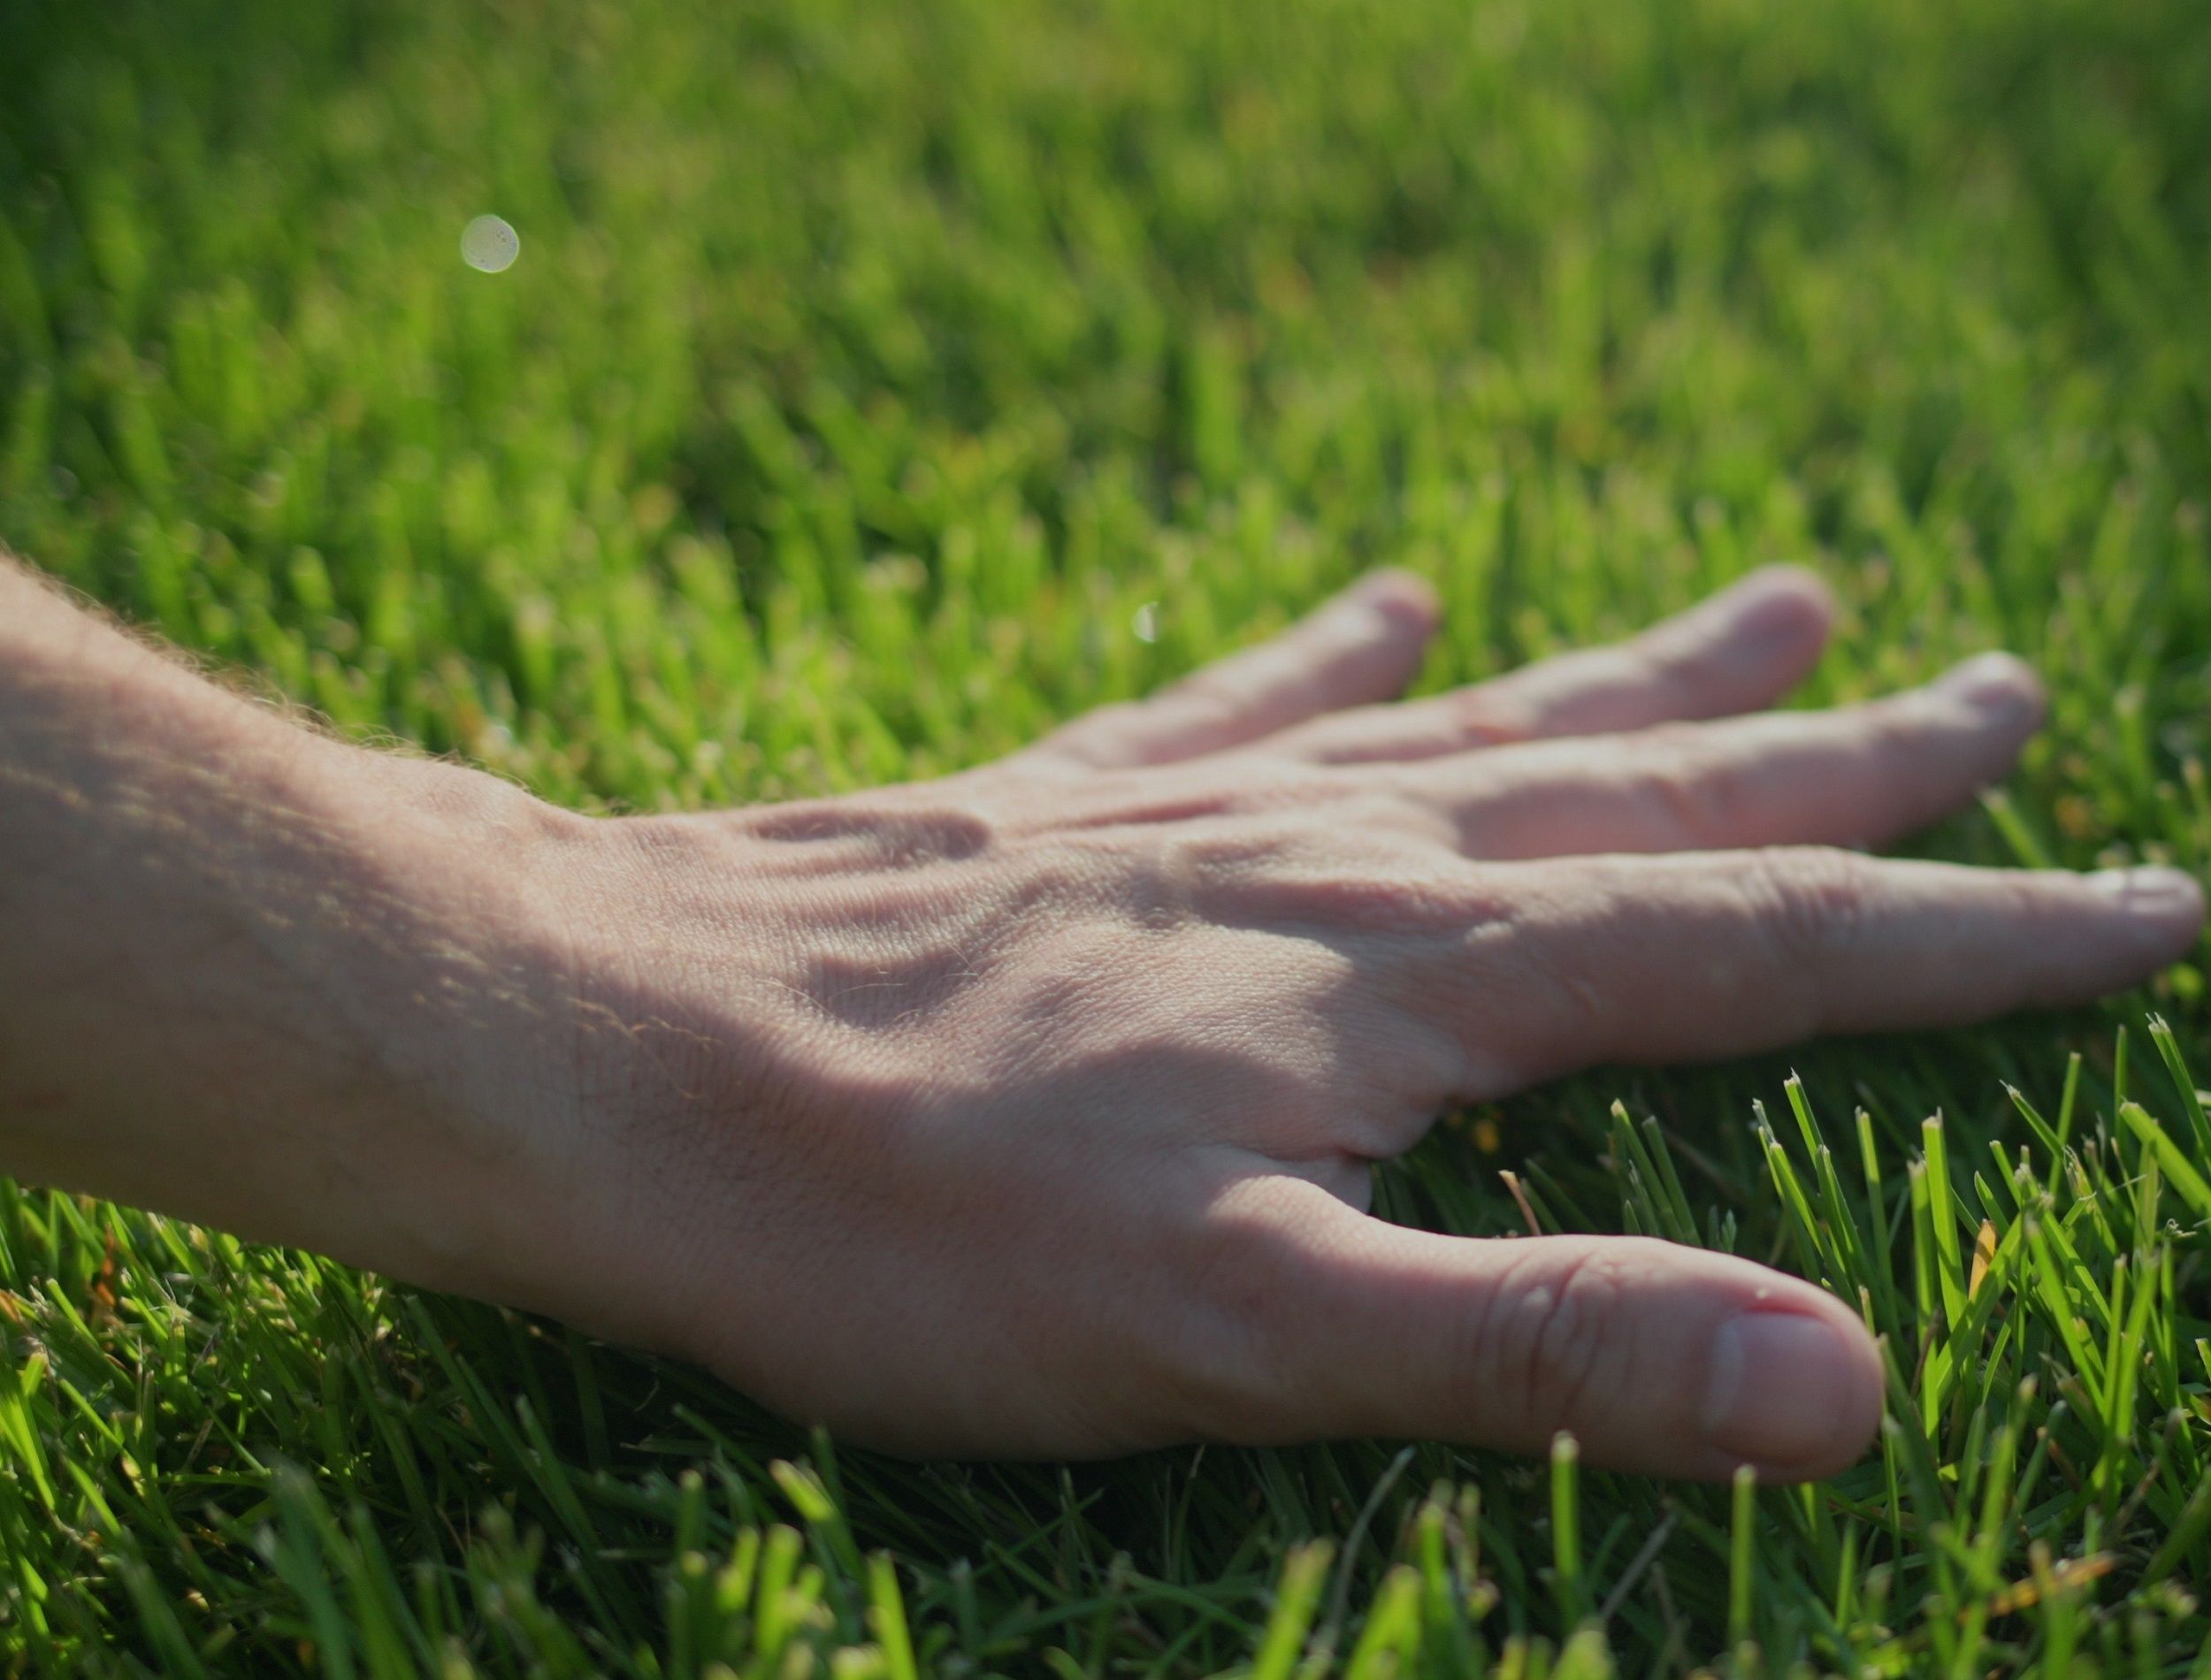 Hand lightly touching a beautiful grass lawn